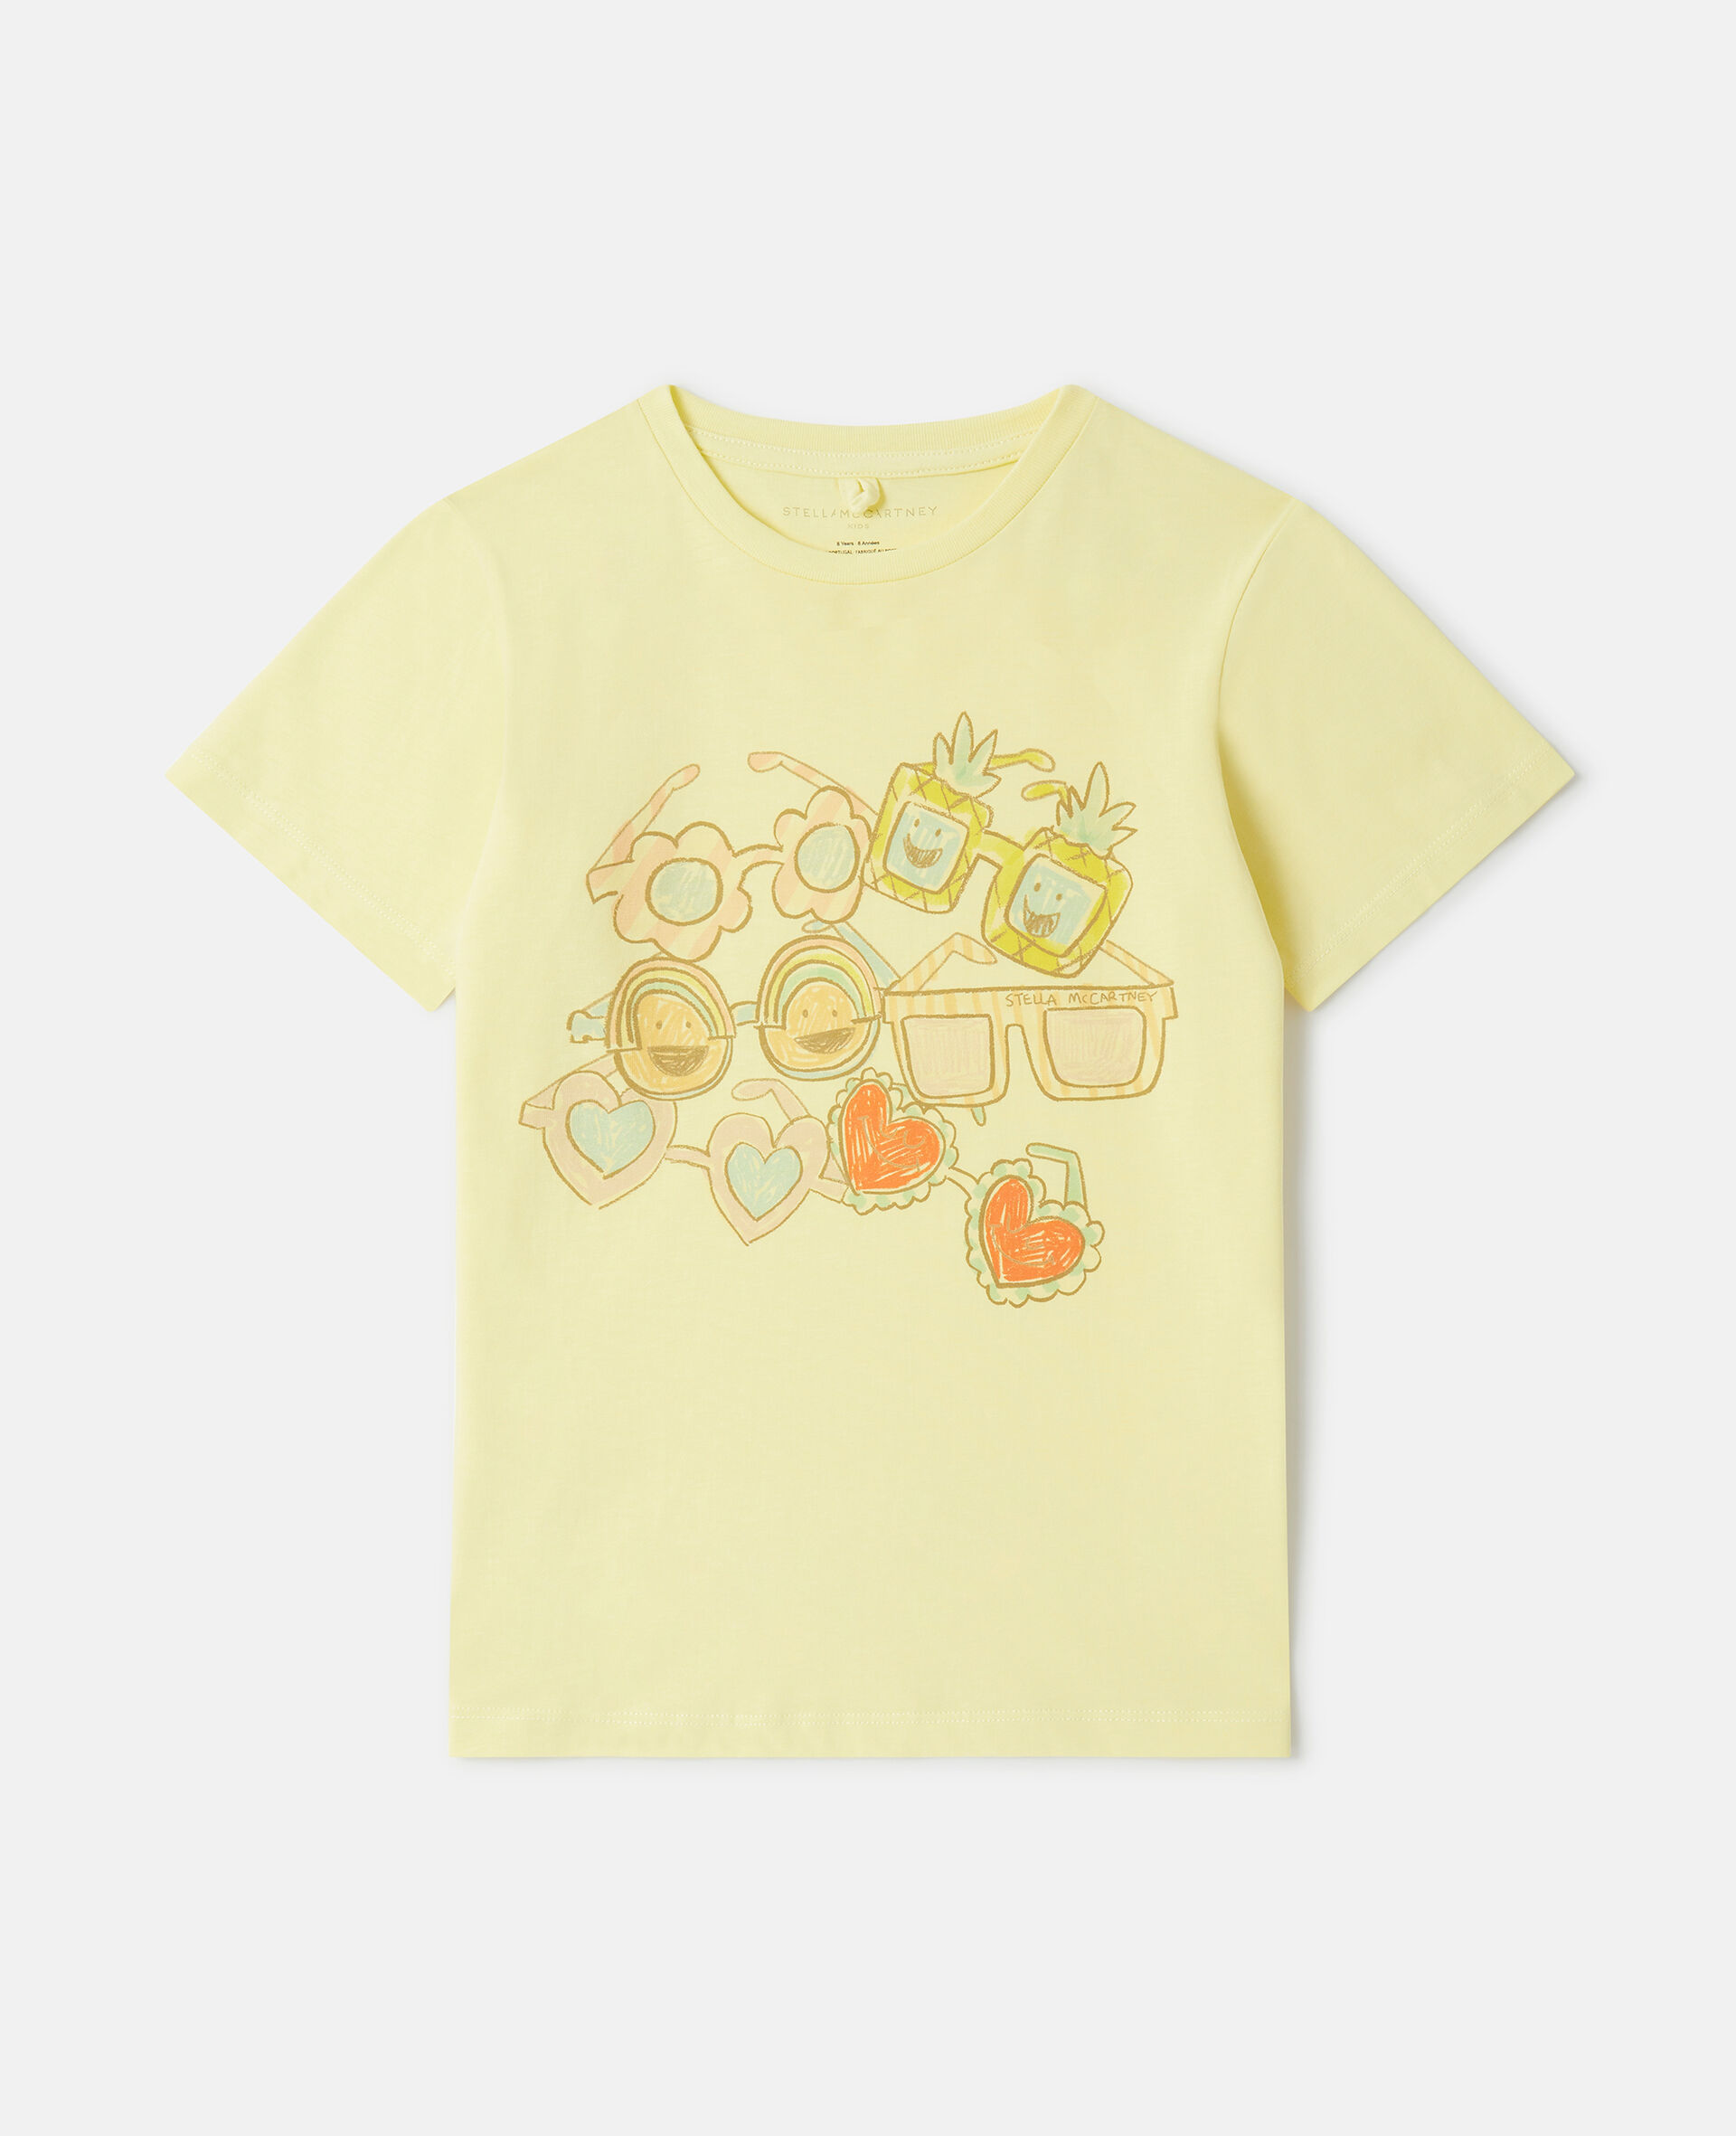 Sunglasses Doodle T-Shirt-黄色-medium